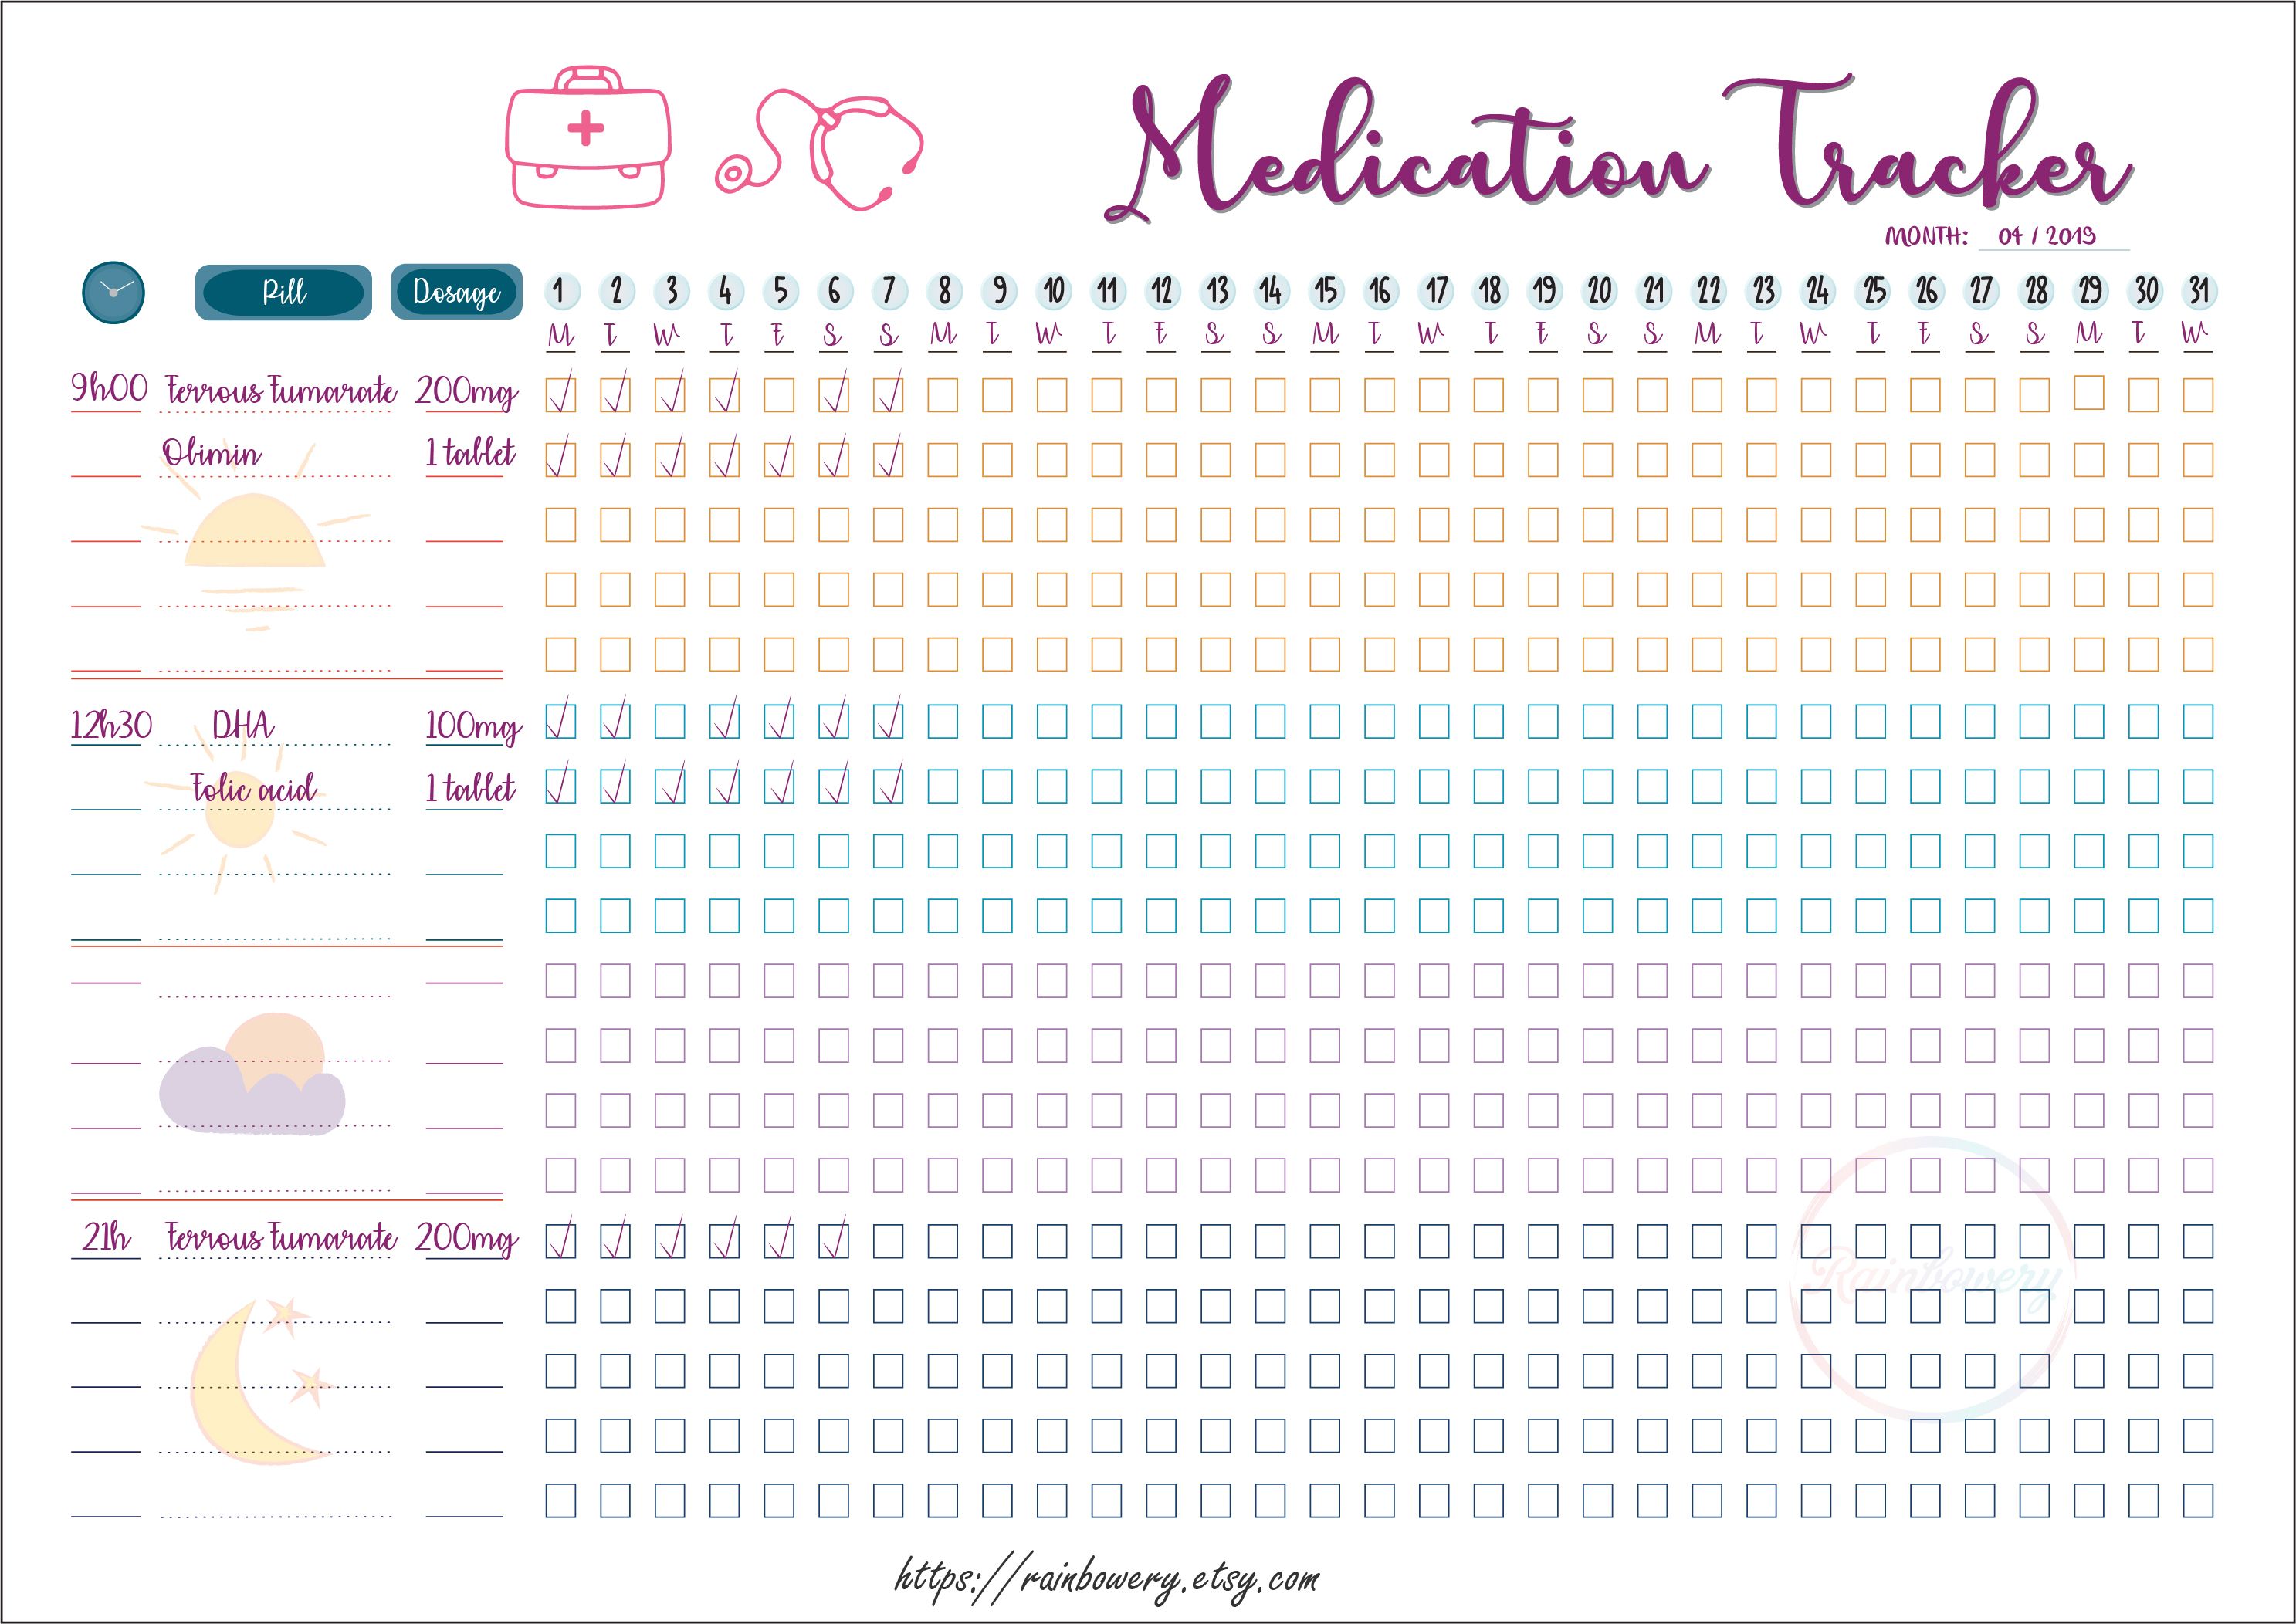 28 day calendar for multi dose medications 91